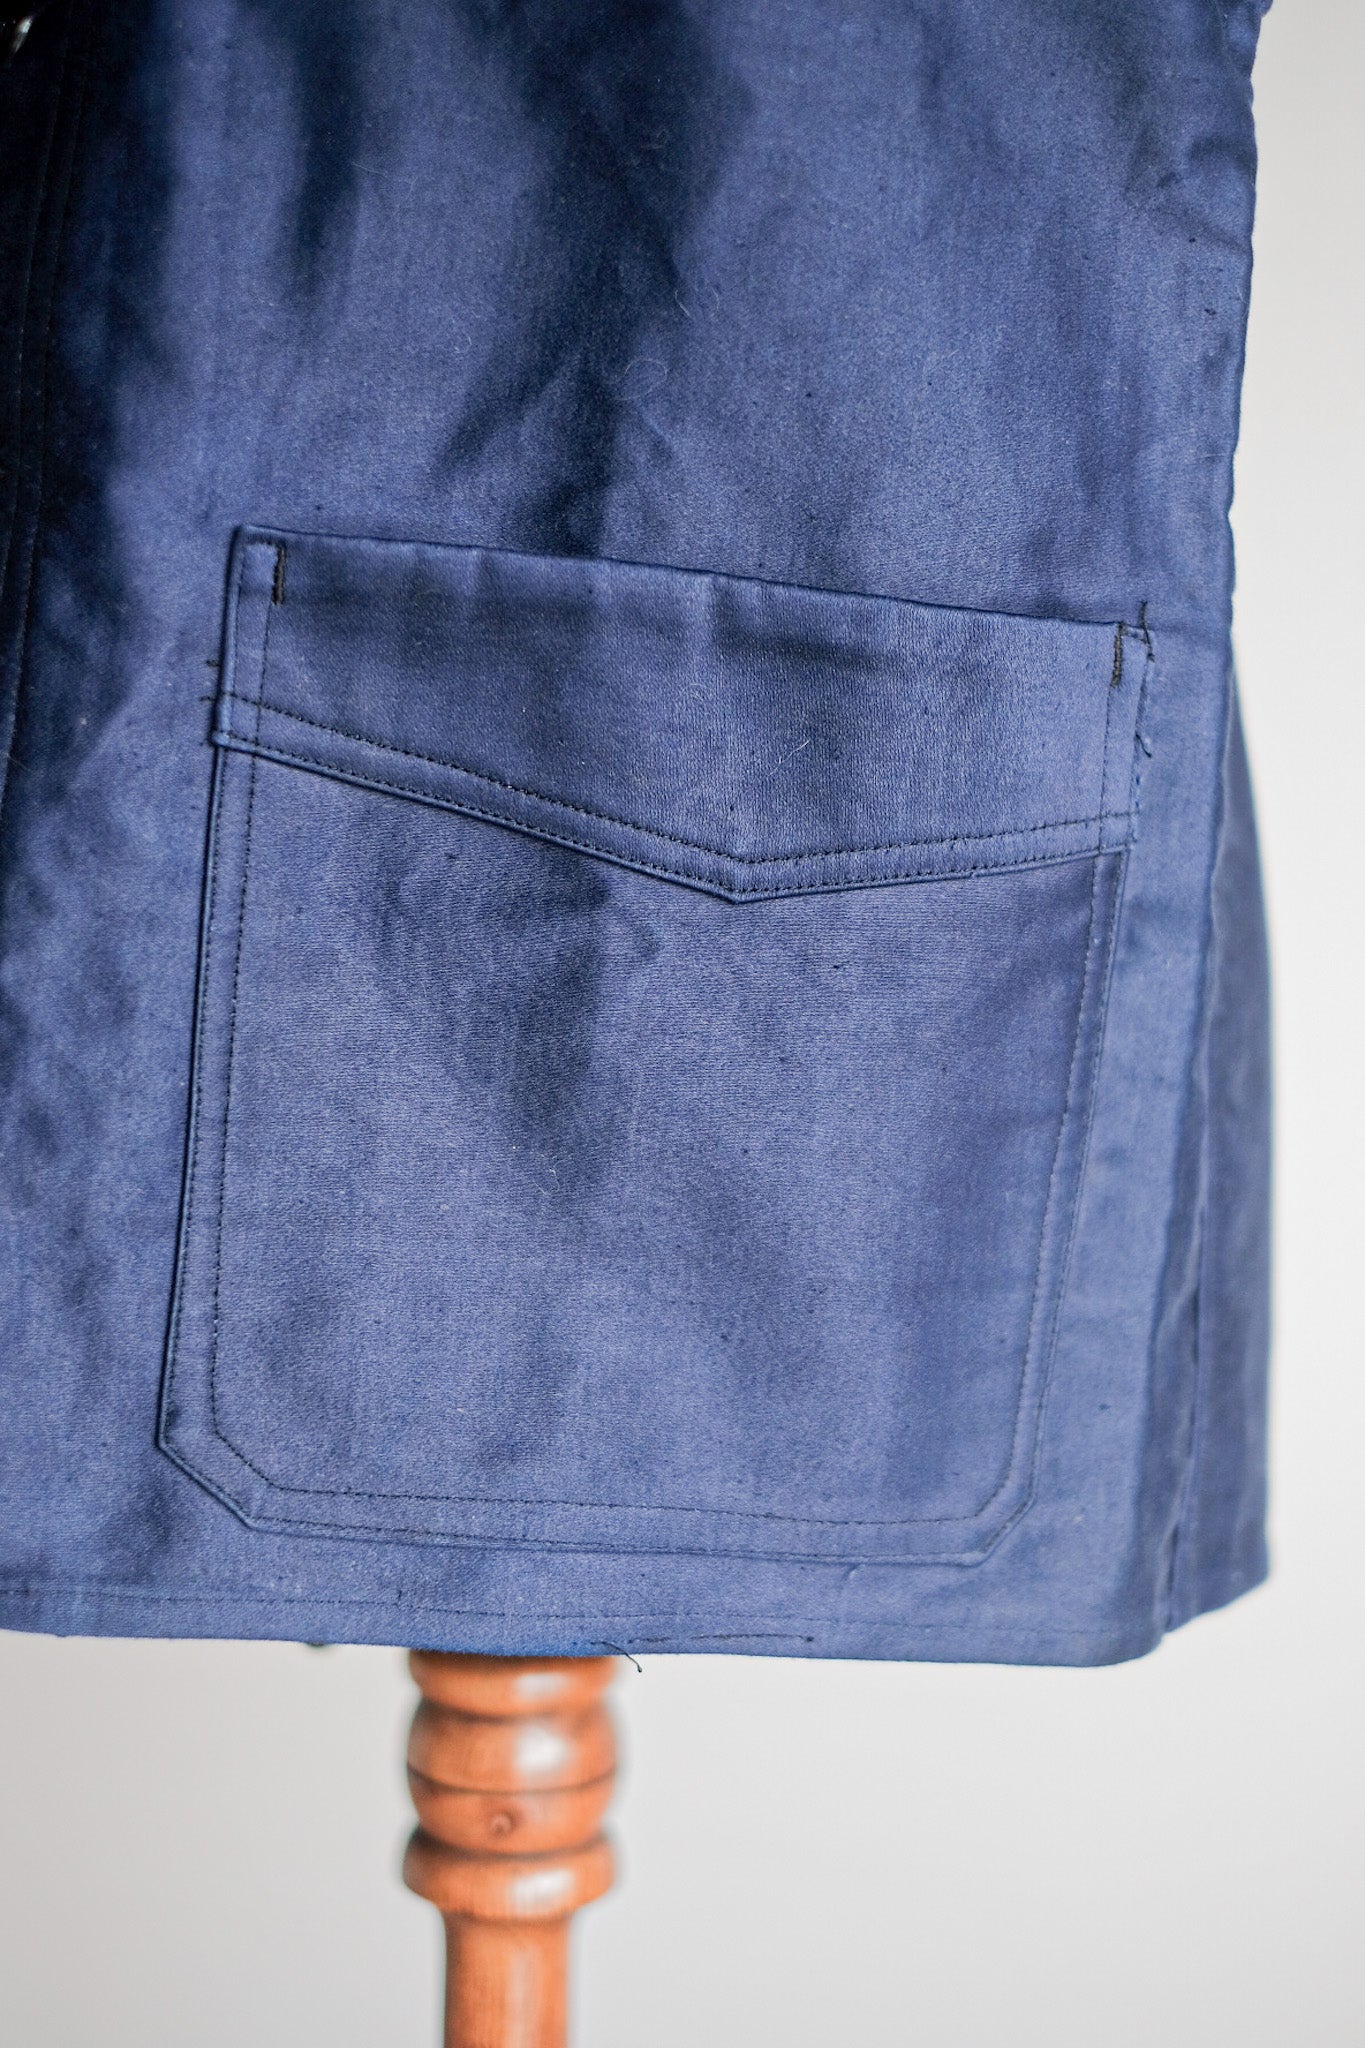 【~40's】French Vintage Blue Moleskin Work Jacket "Le Mont St. Michel" "Dead Stock"